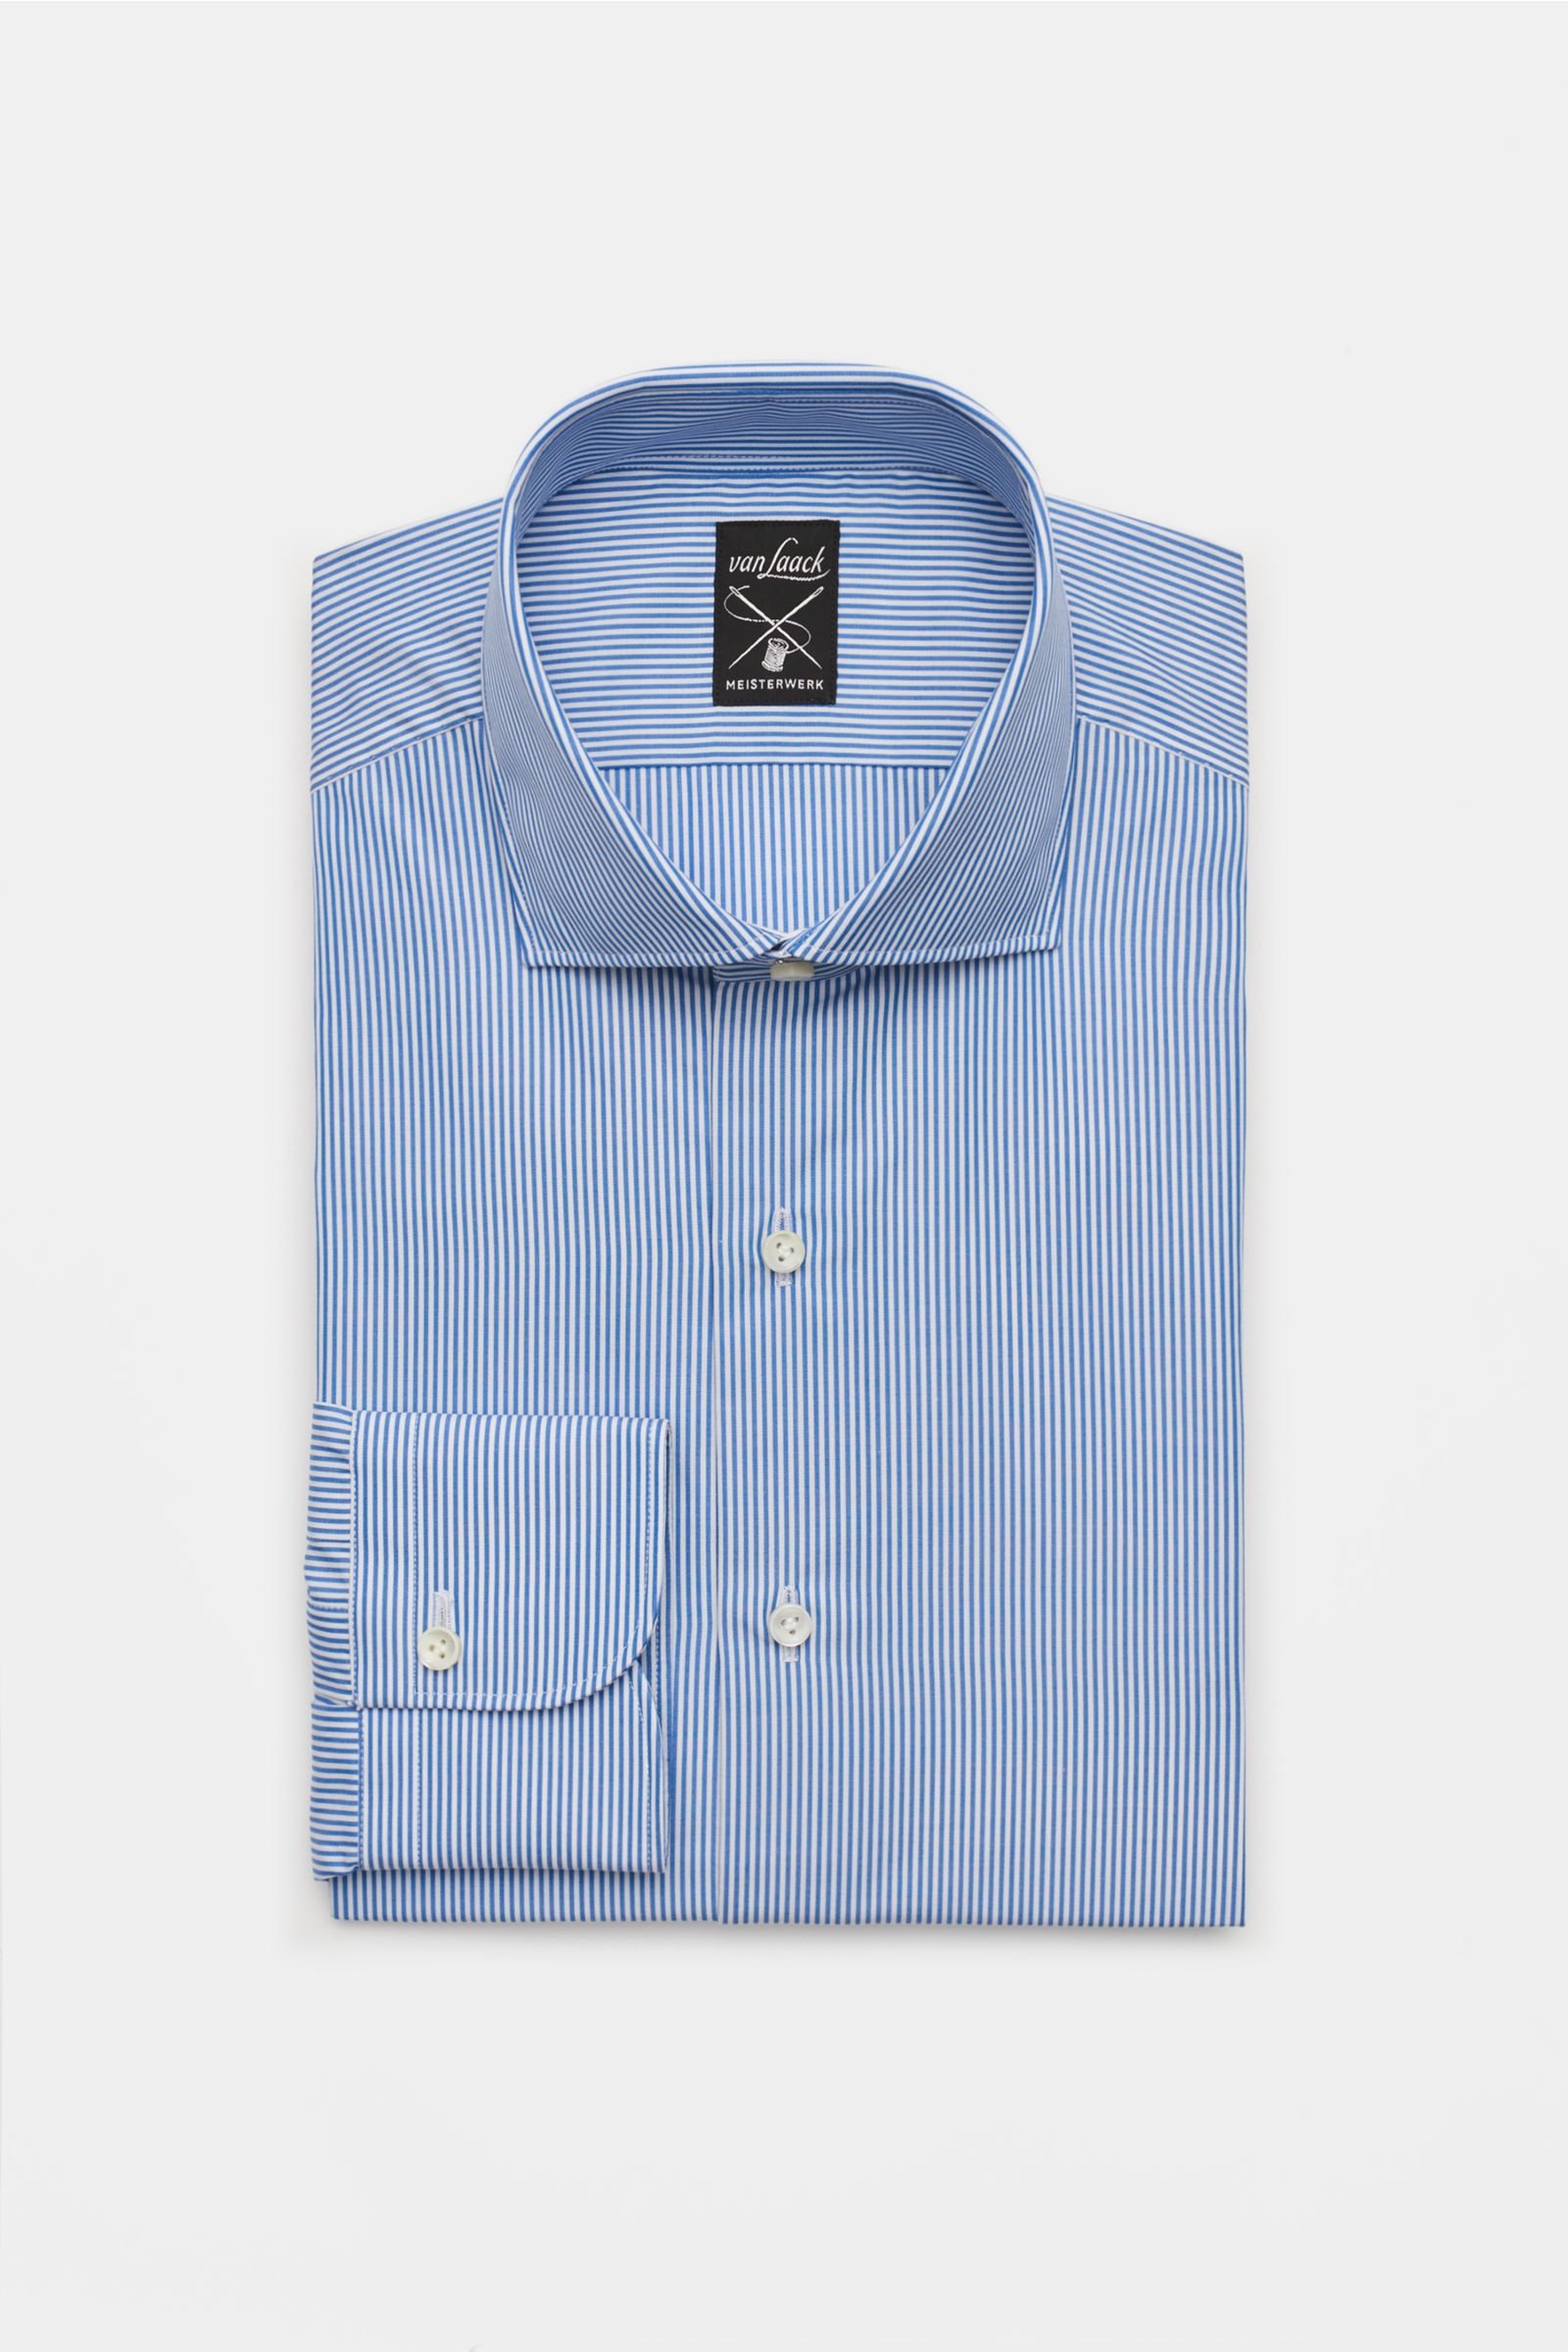 Business shirt 'Mivara Tailor Fit' shark collar grey-blue/white striped